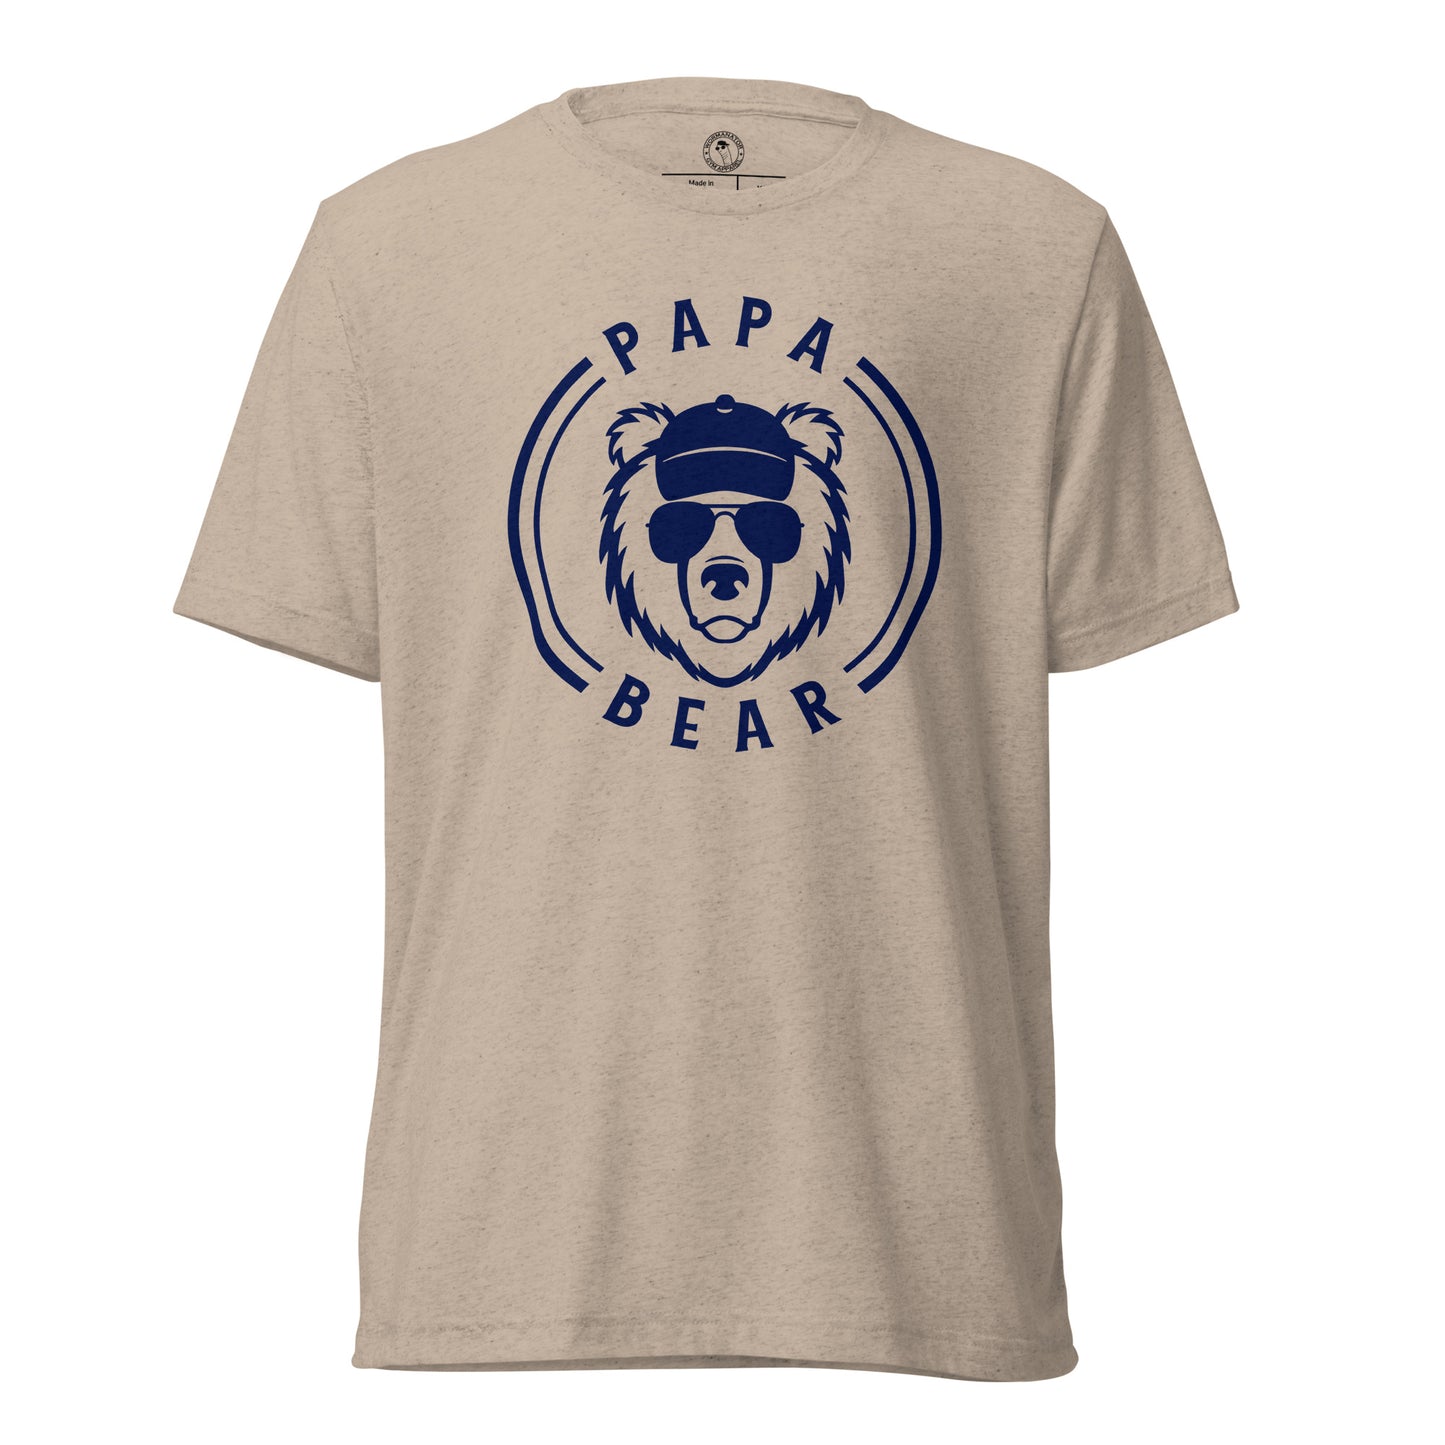 Papa Bear T-Shirt in Tan Triblend